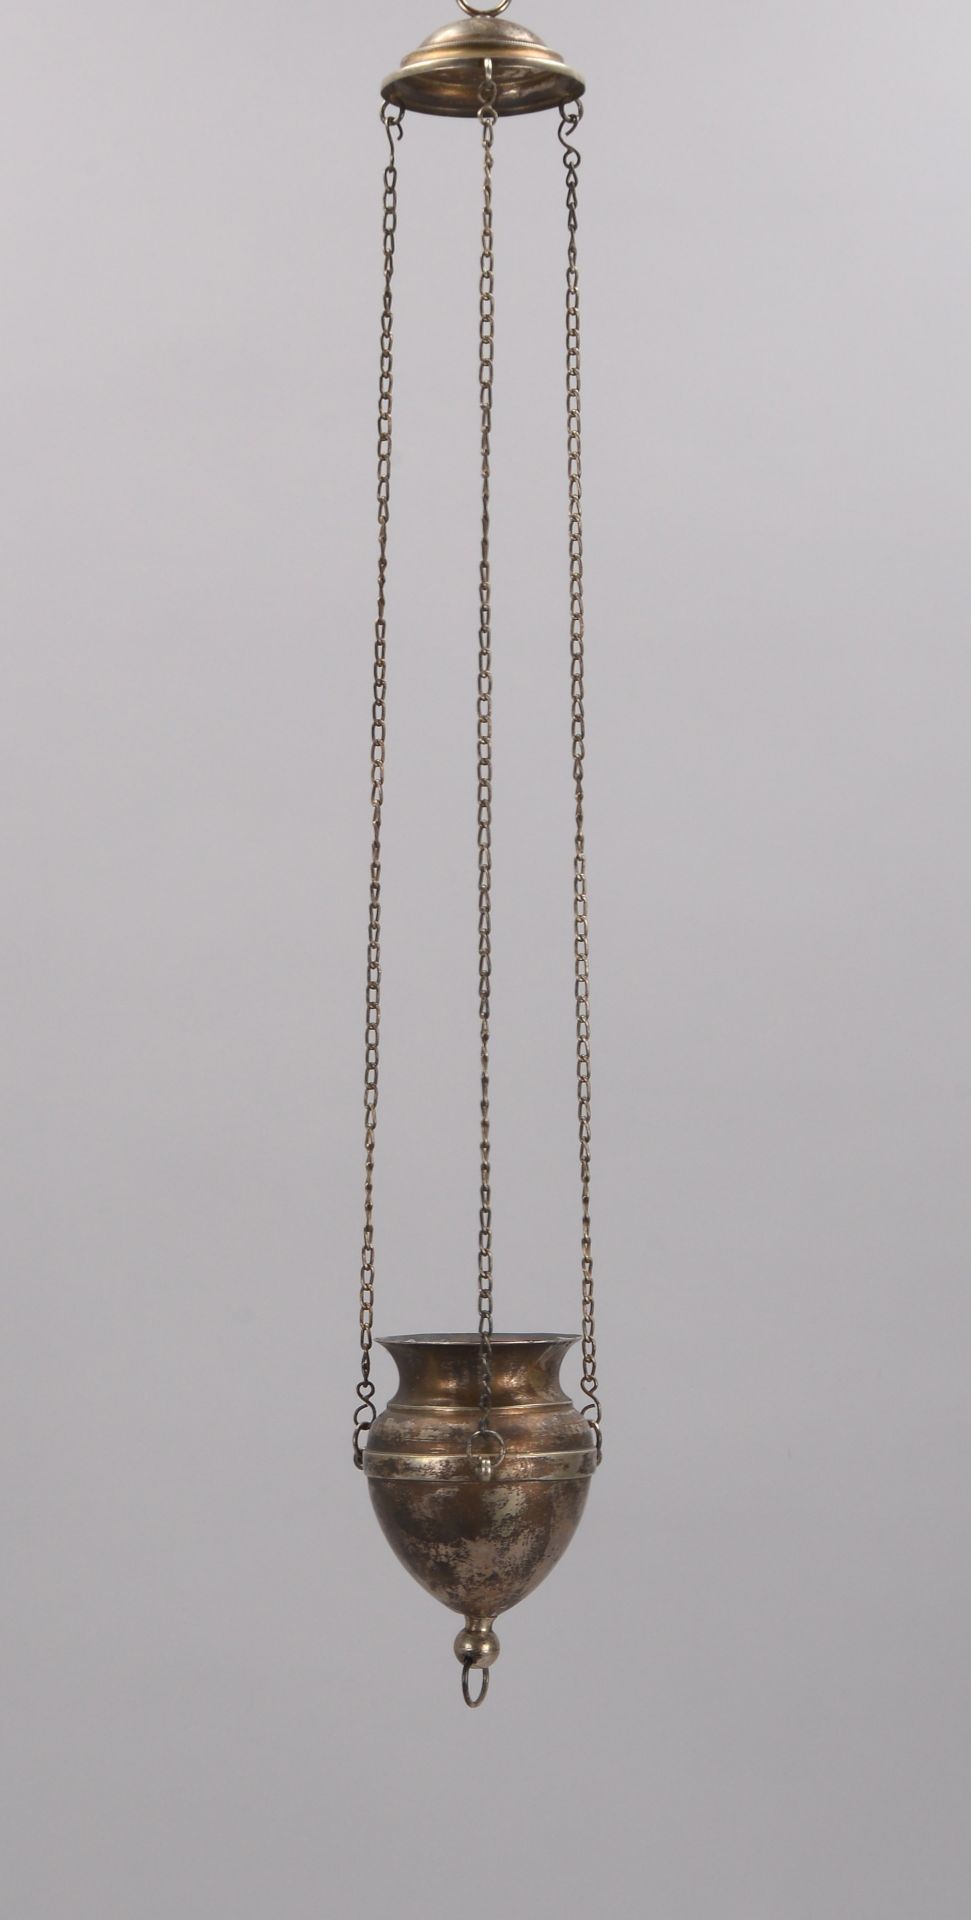 Kirchenlampe/sakraler Haengeleuchter (Wien/Austrian Empire, 1804 - 1867), 13-loetiges Silber, mehrfa